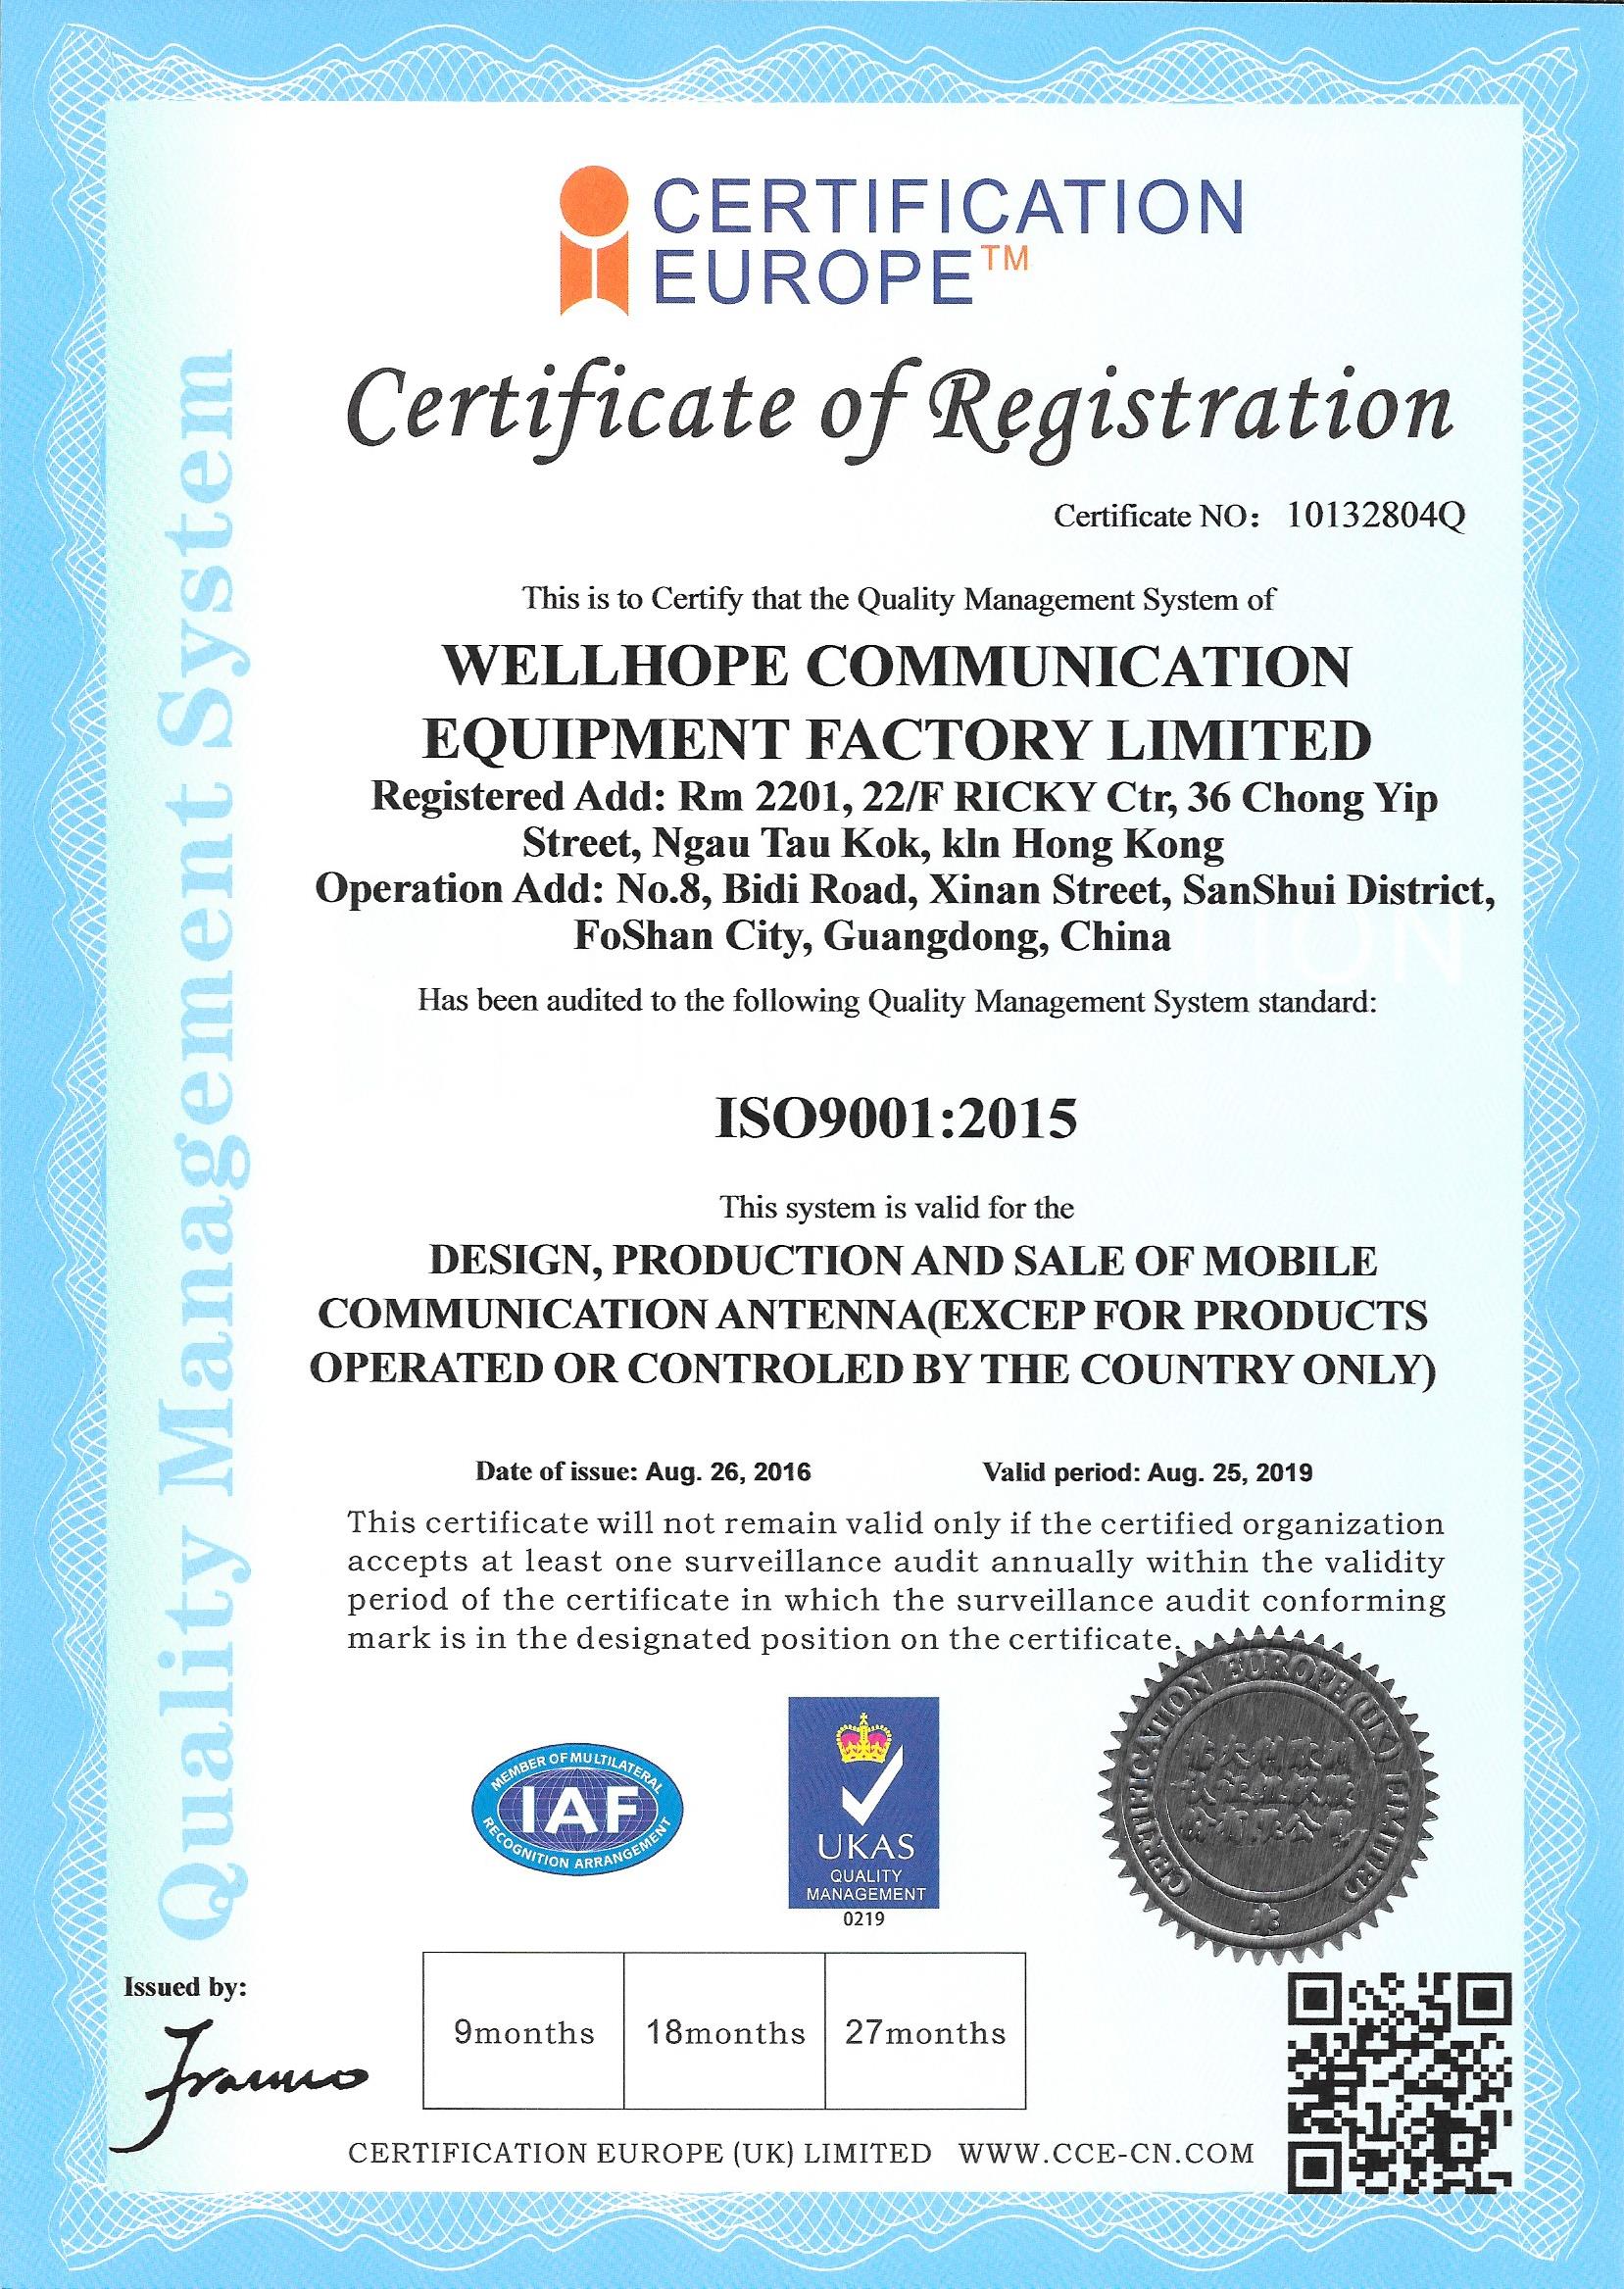   wellhope wireless одобряет ISO9001